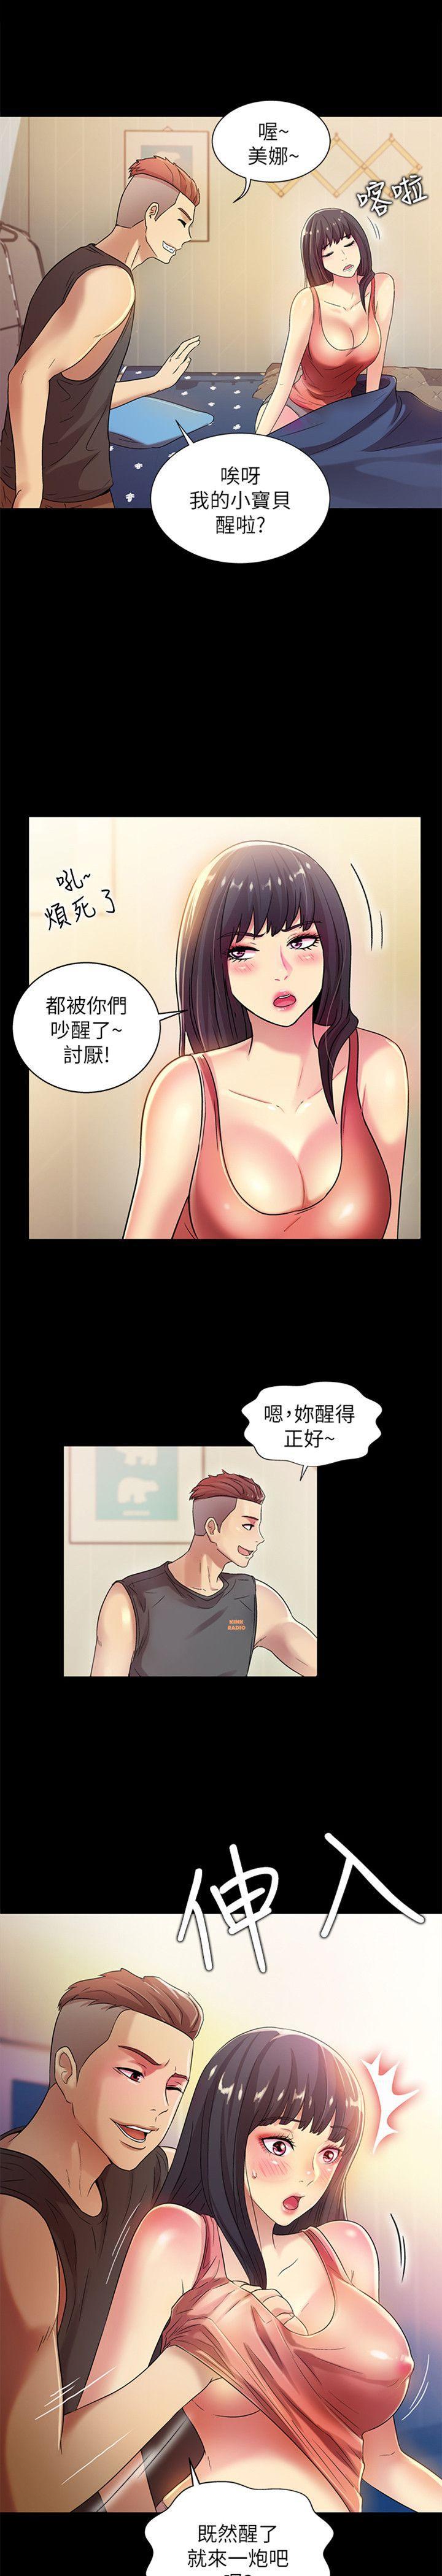 lovelove漫画-第9话-朋友的新提议全彩韩漫标签